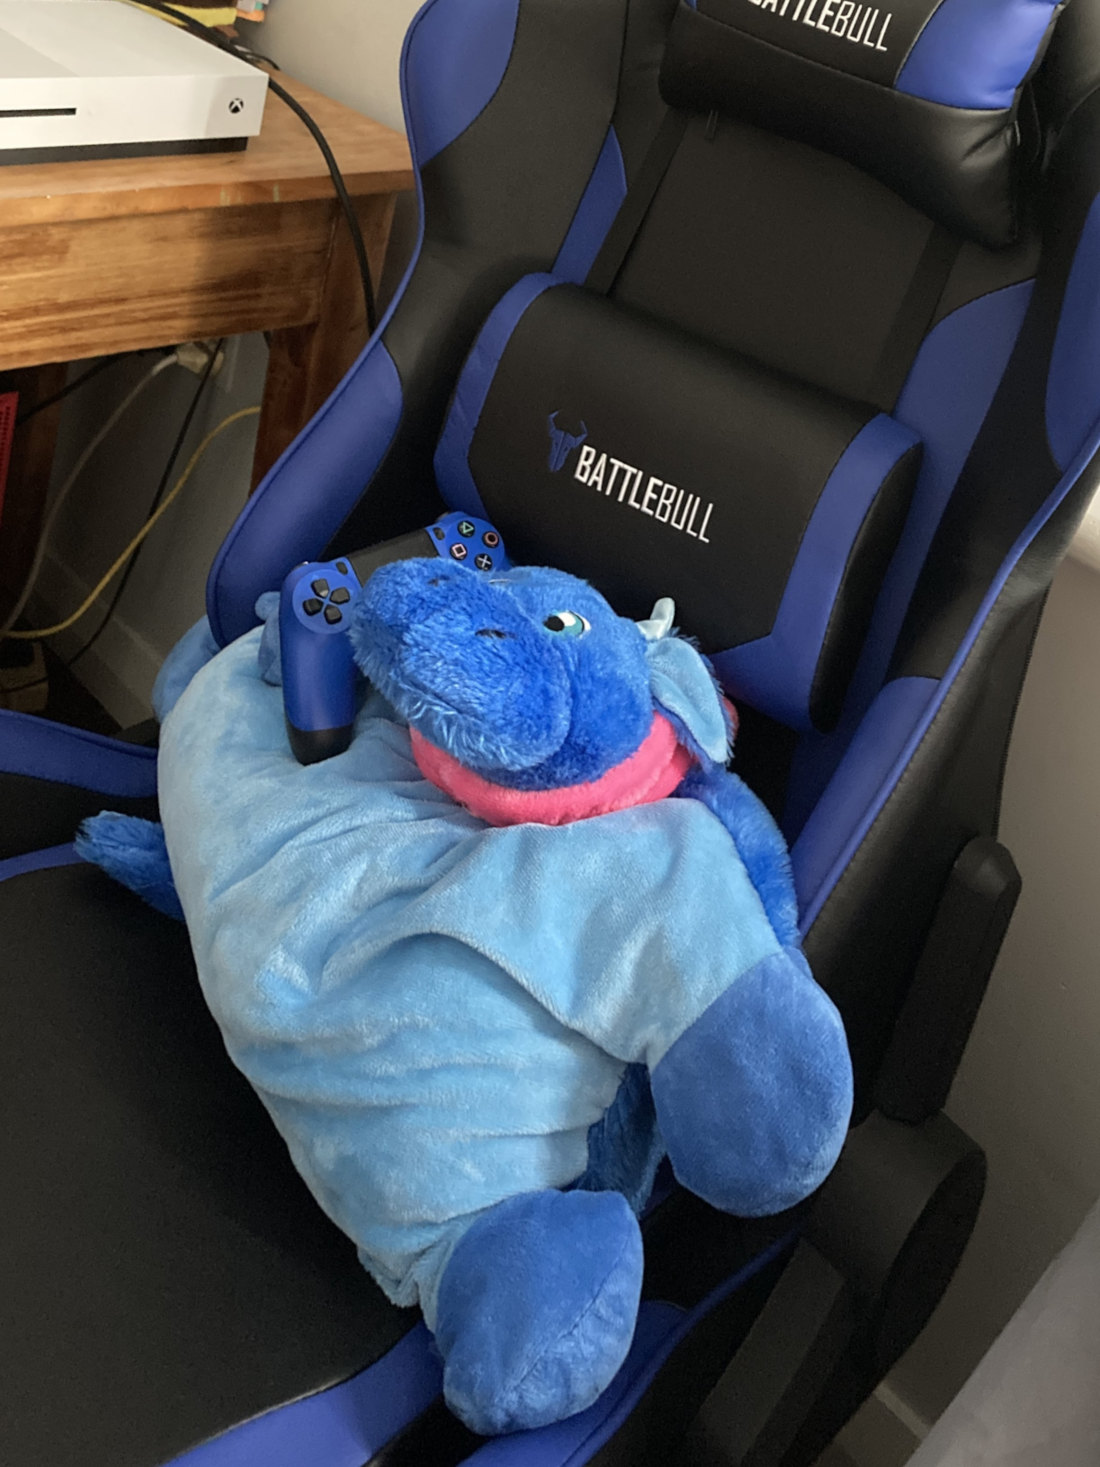 Blue dragon plushy sitting in blue chair holding blue controller